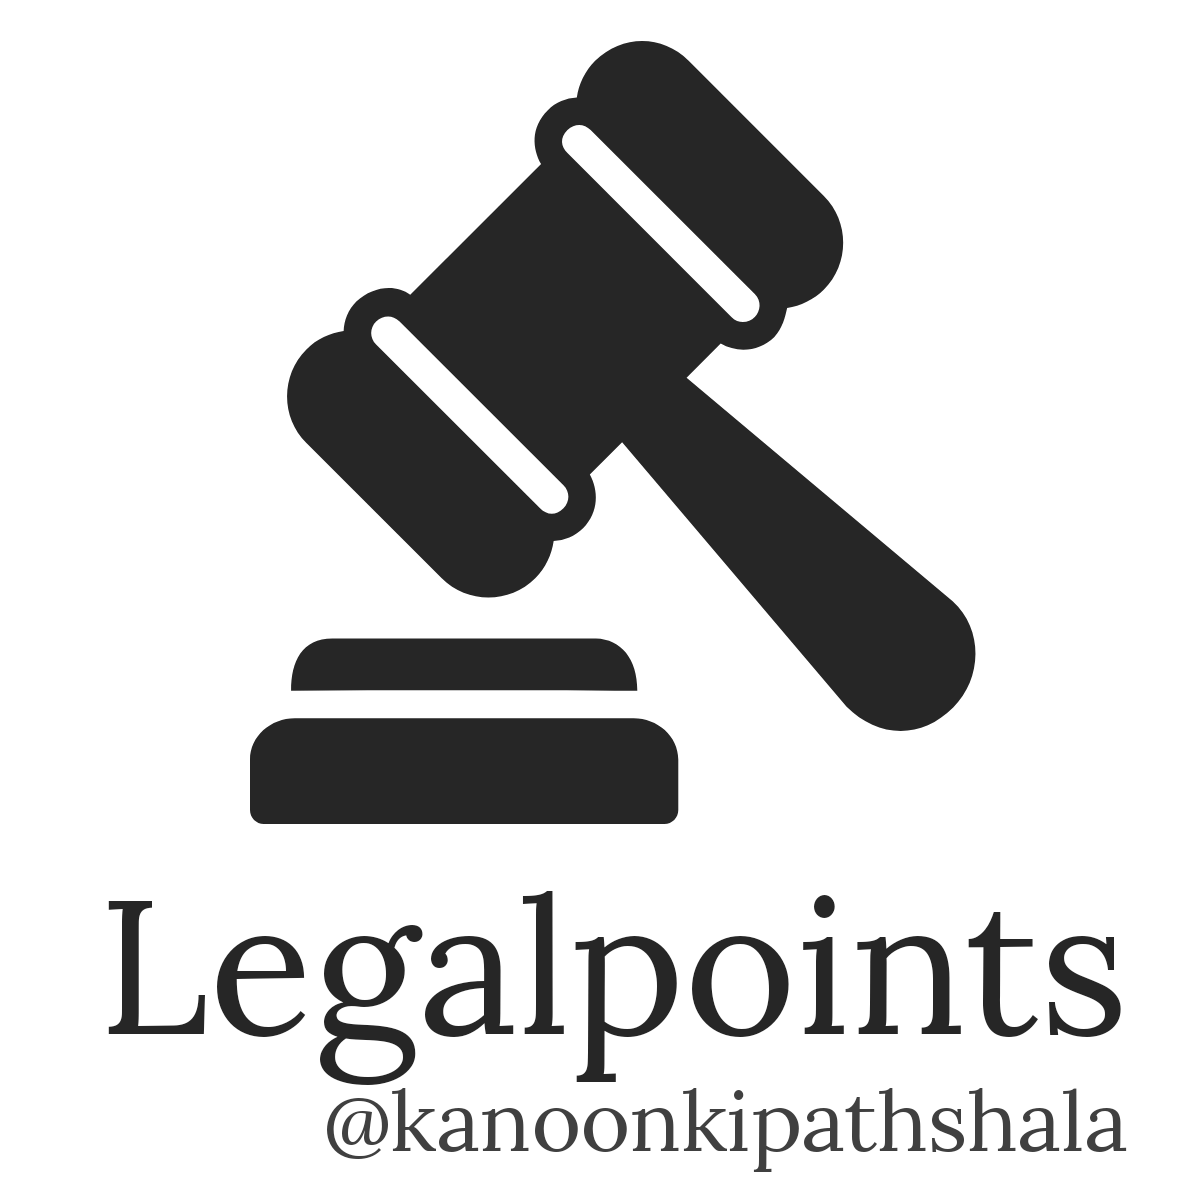 The Legalpoints 